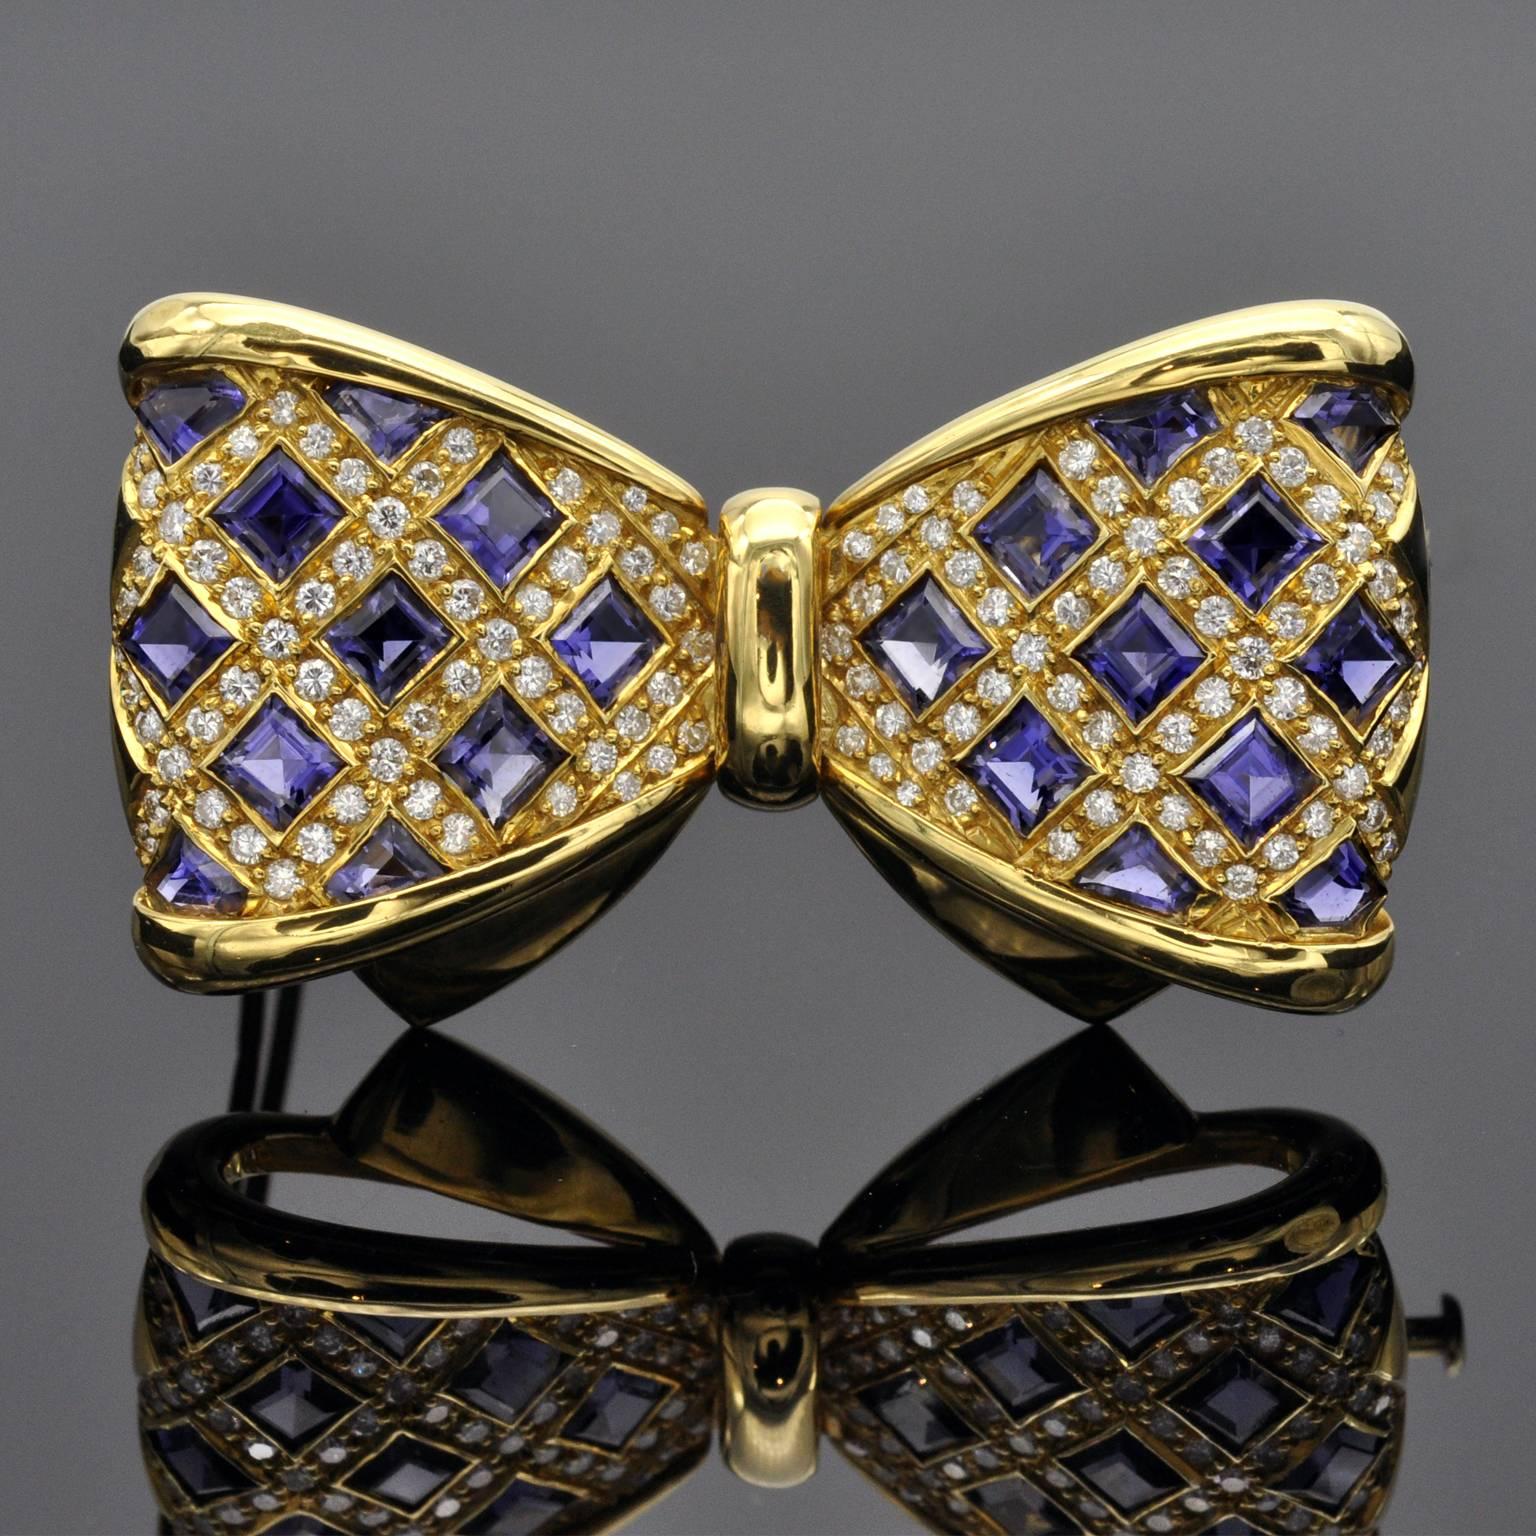 Classy square Iolite and diamond bowtie brooch.
Diamond: ± 2 carat G VS or better
18kt Gold 
